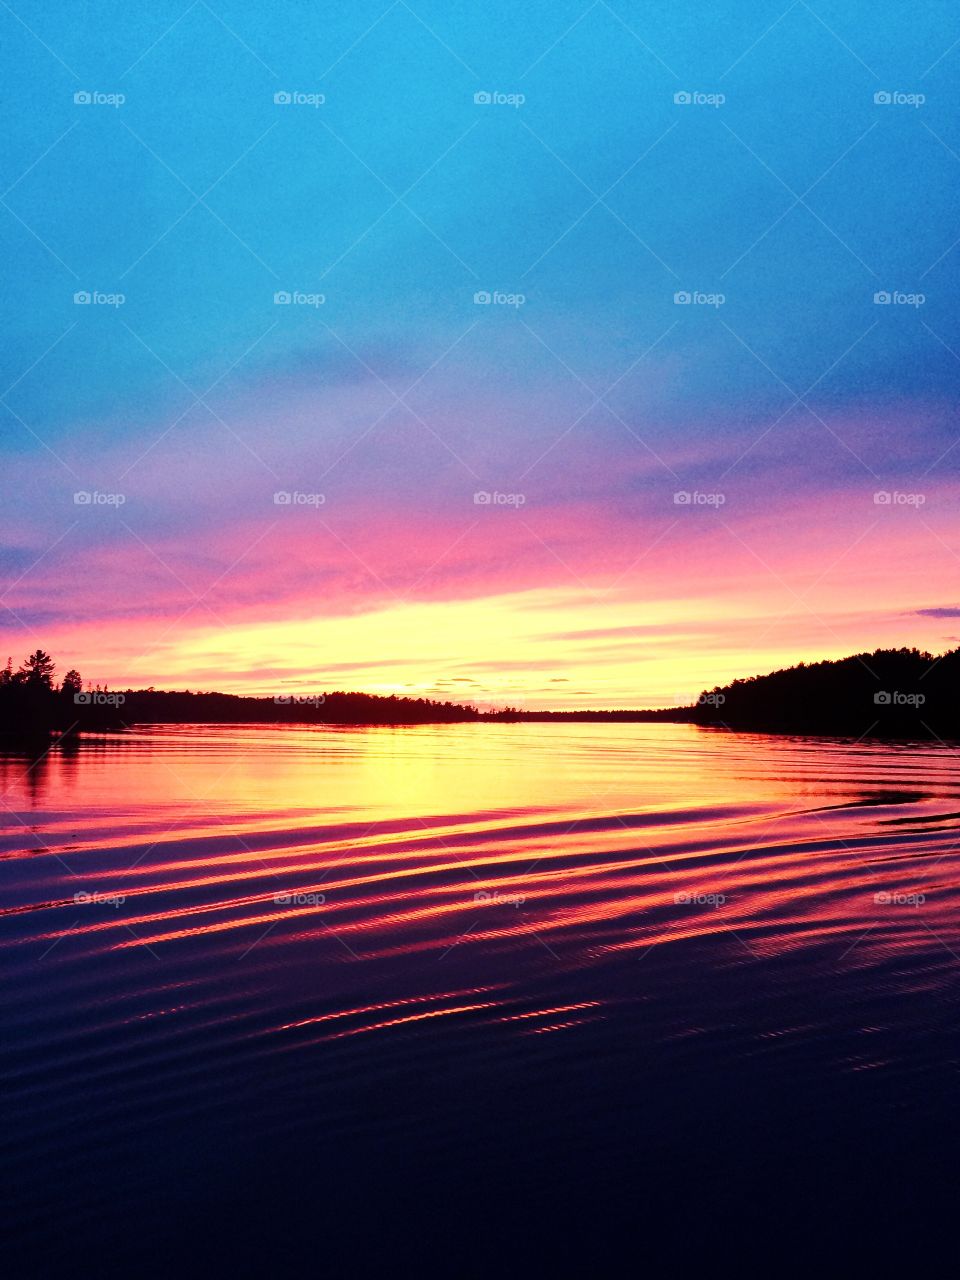 Breathtaking sunset on Trout Lake. Sunset cruise on the boat. 